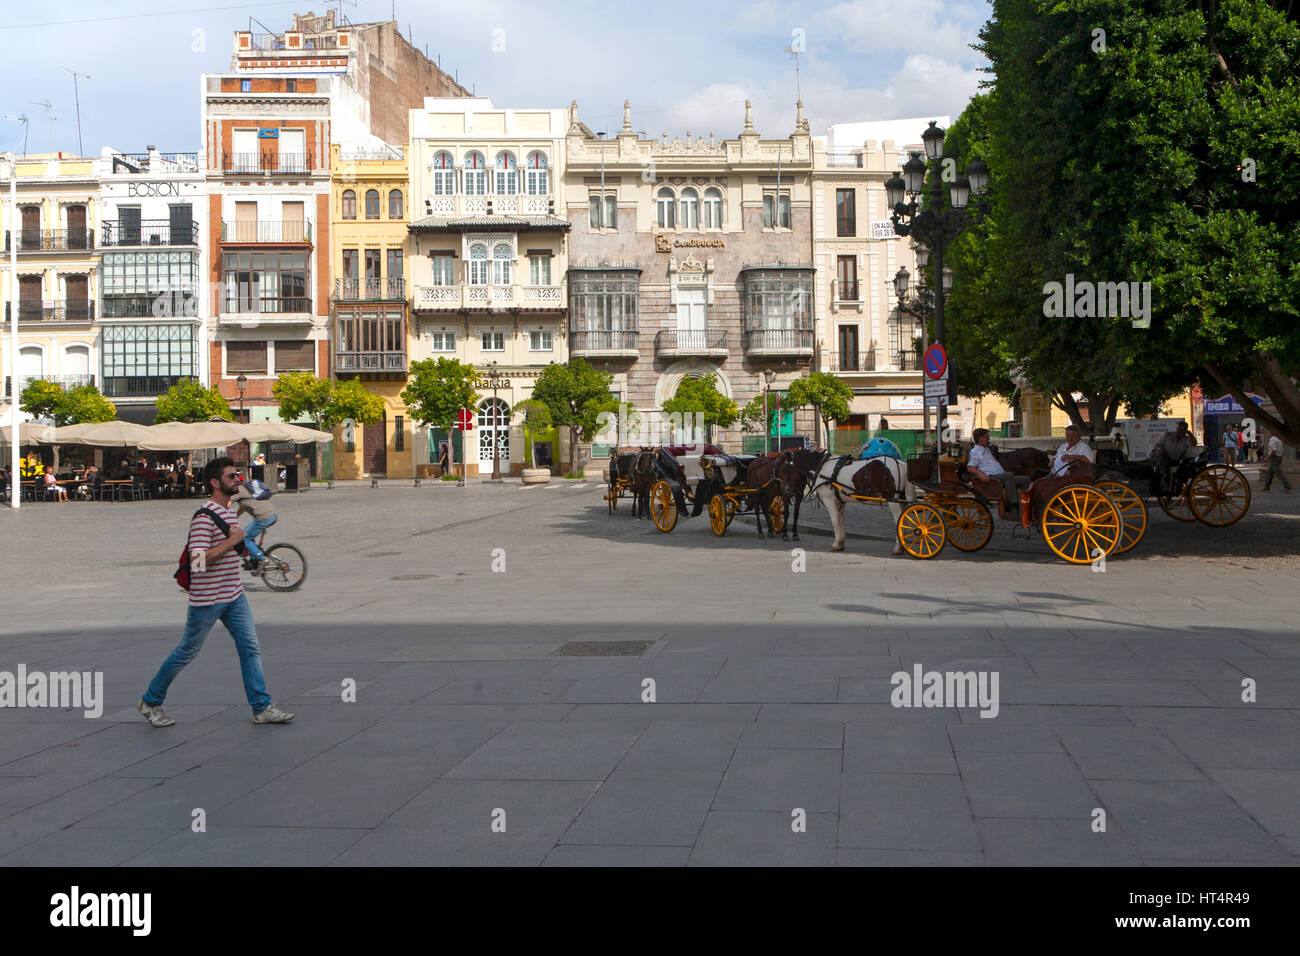 Historic buildings, Plaza de San Francisco, Seville, Spain Stock Photo